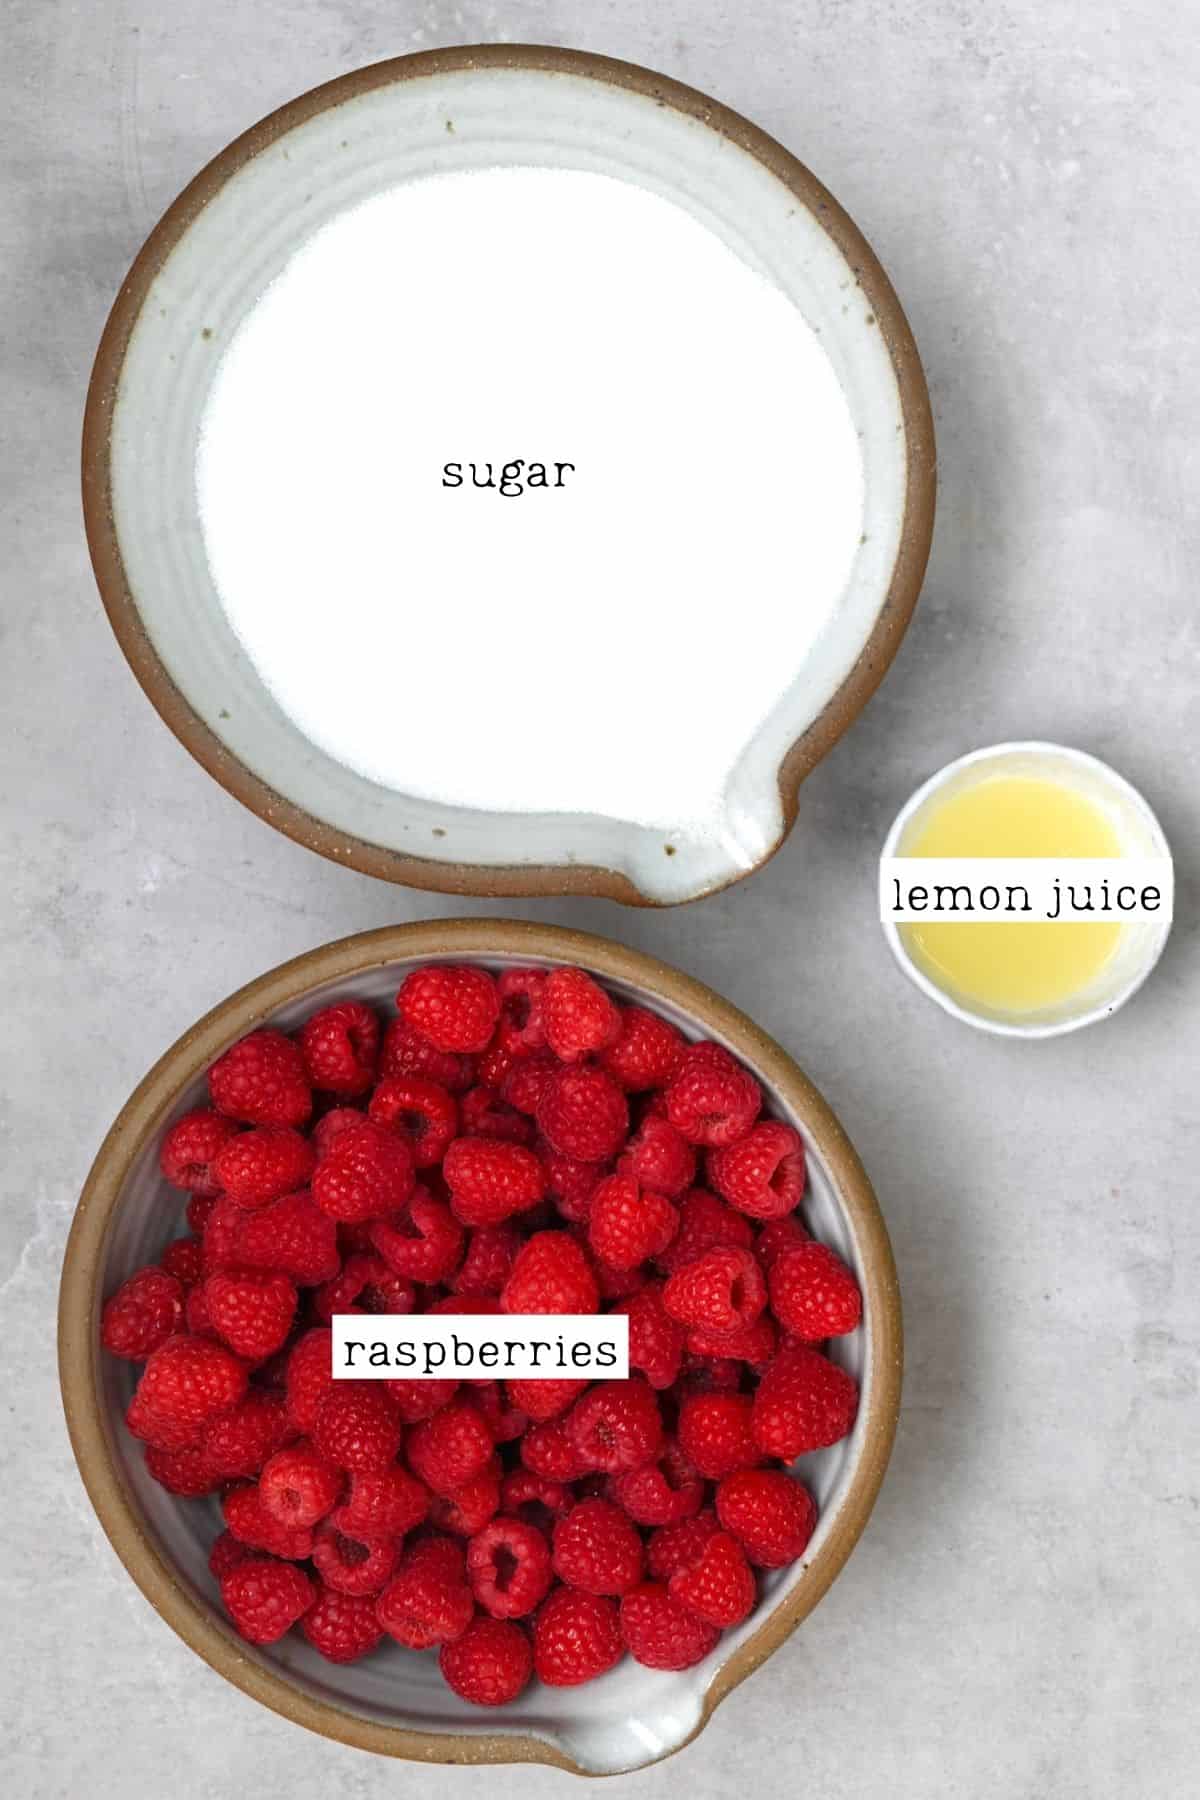 Ingredients for raspberry jam